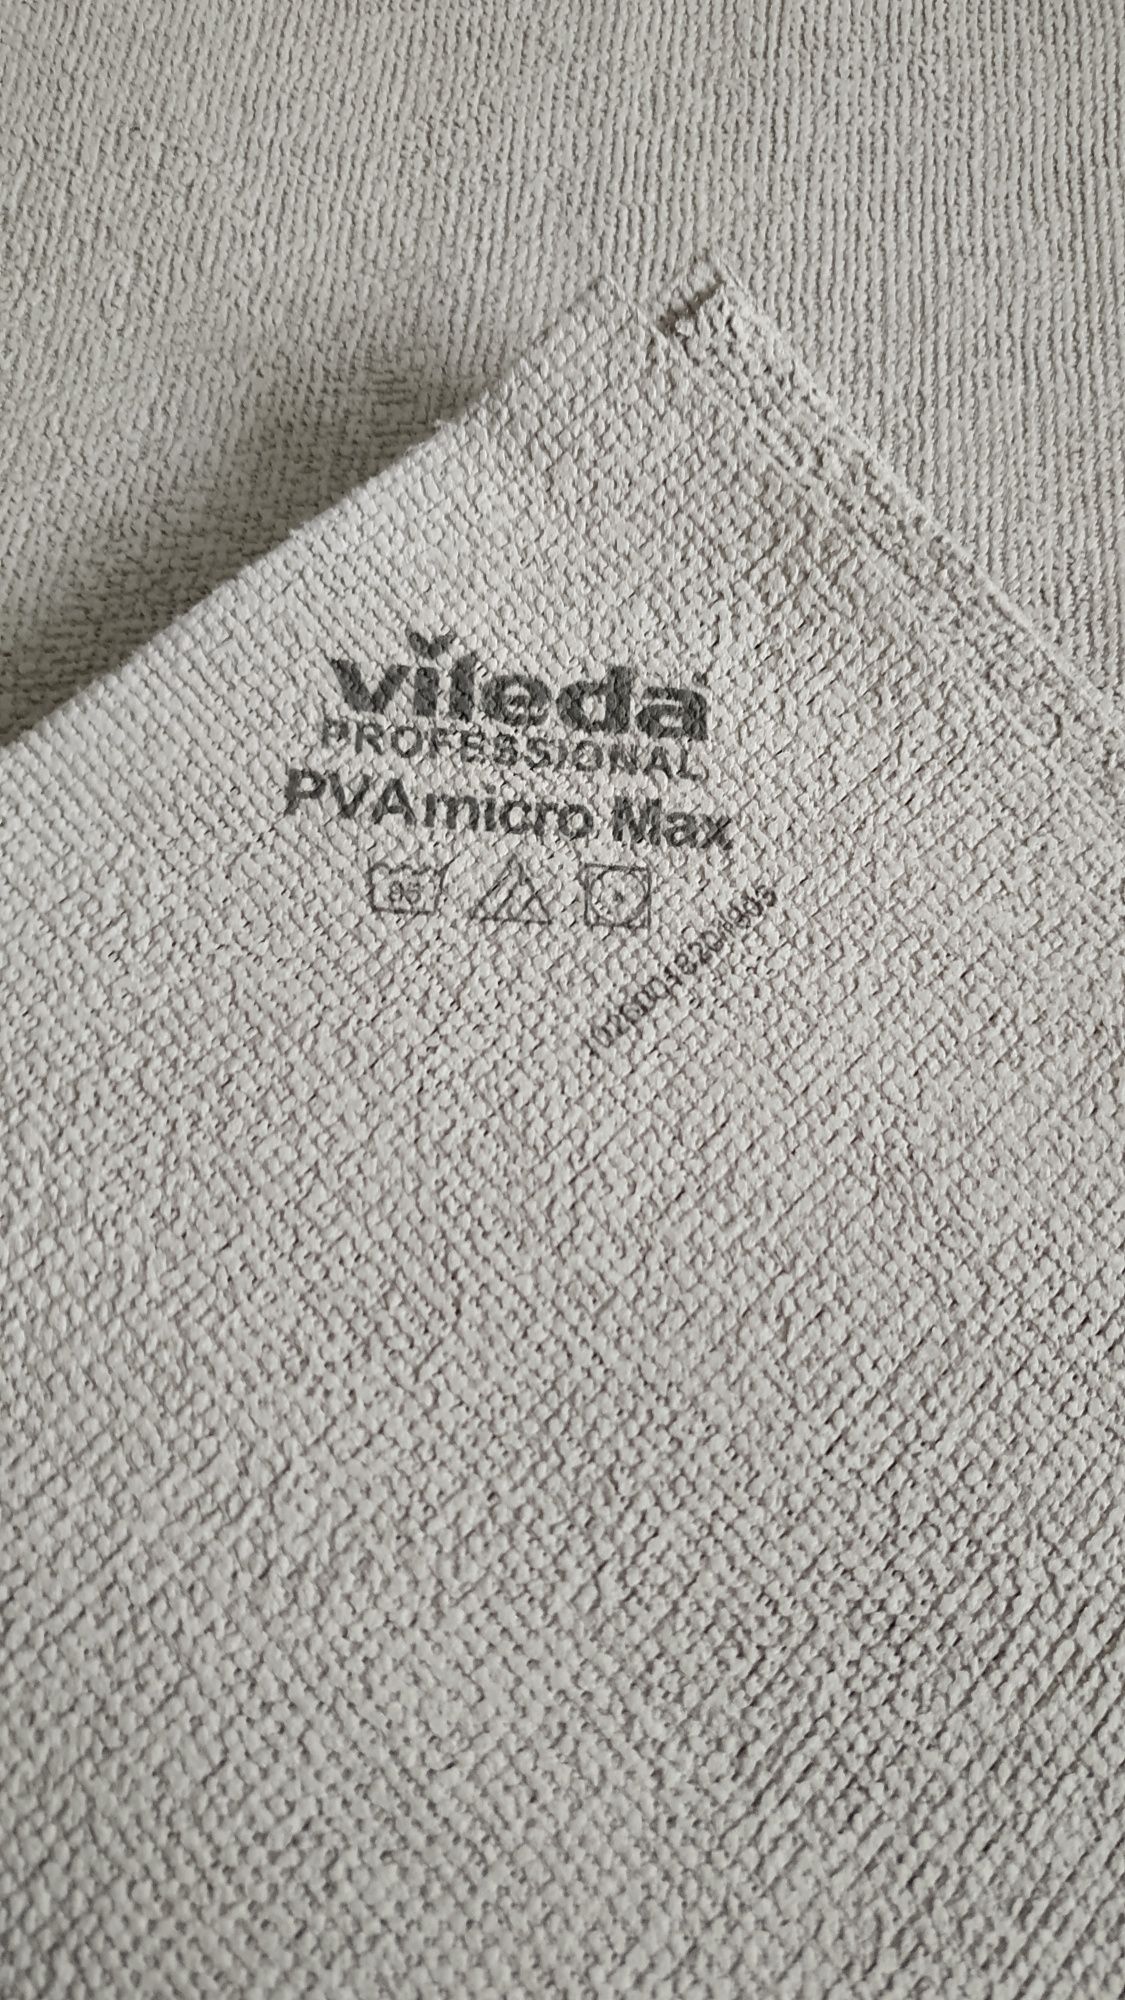 Vileda Professional PVA MicroMax Chamois 3 Pack